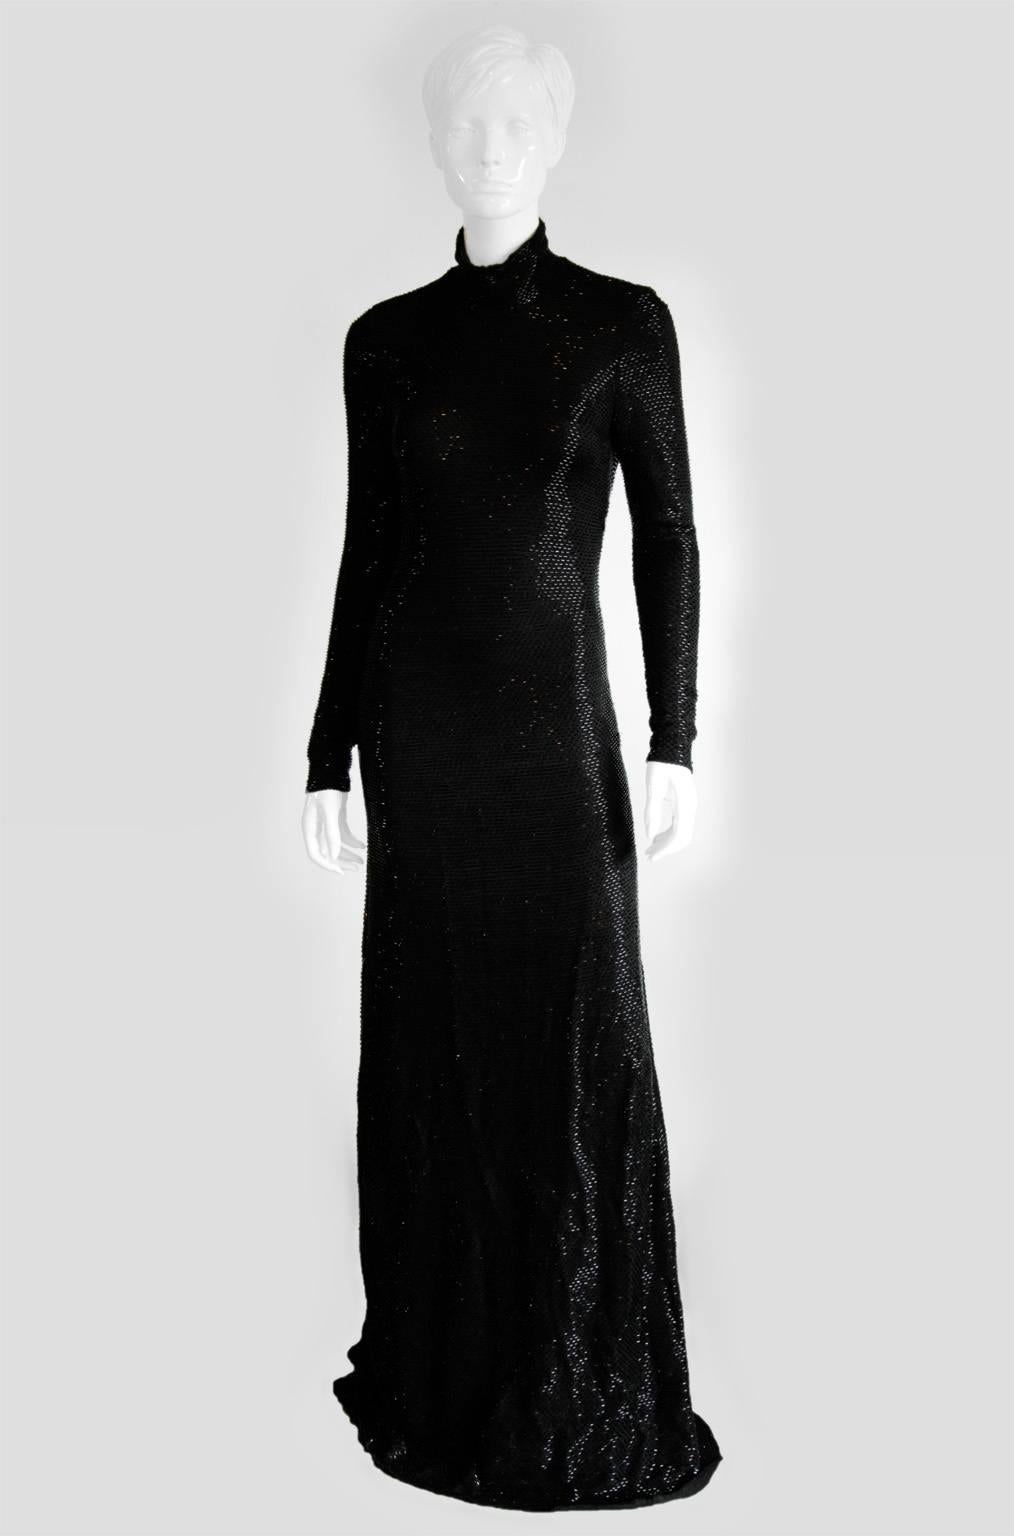 Rare & Iconic Frida Giannini Gucci FW 2004 Black Bugle Bead Gown!

This gorgeous, black bugle bead gown was the 